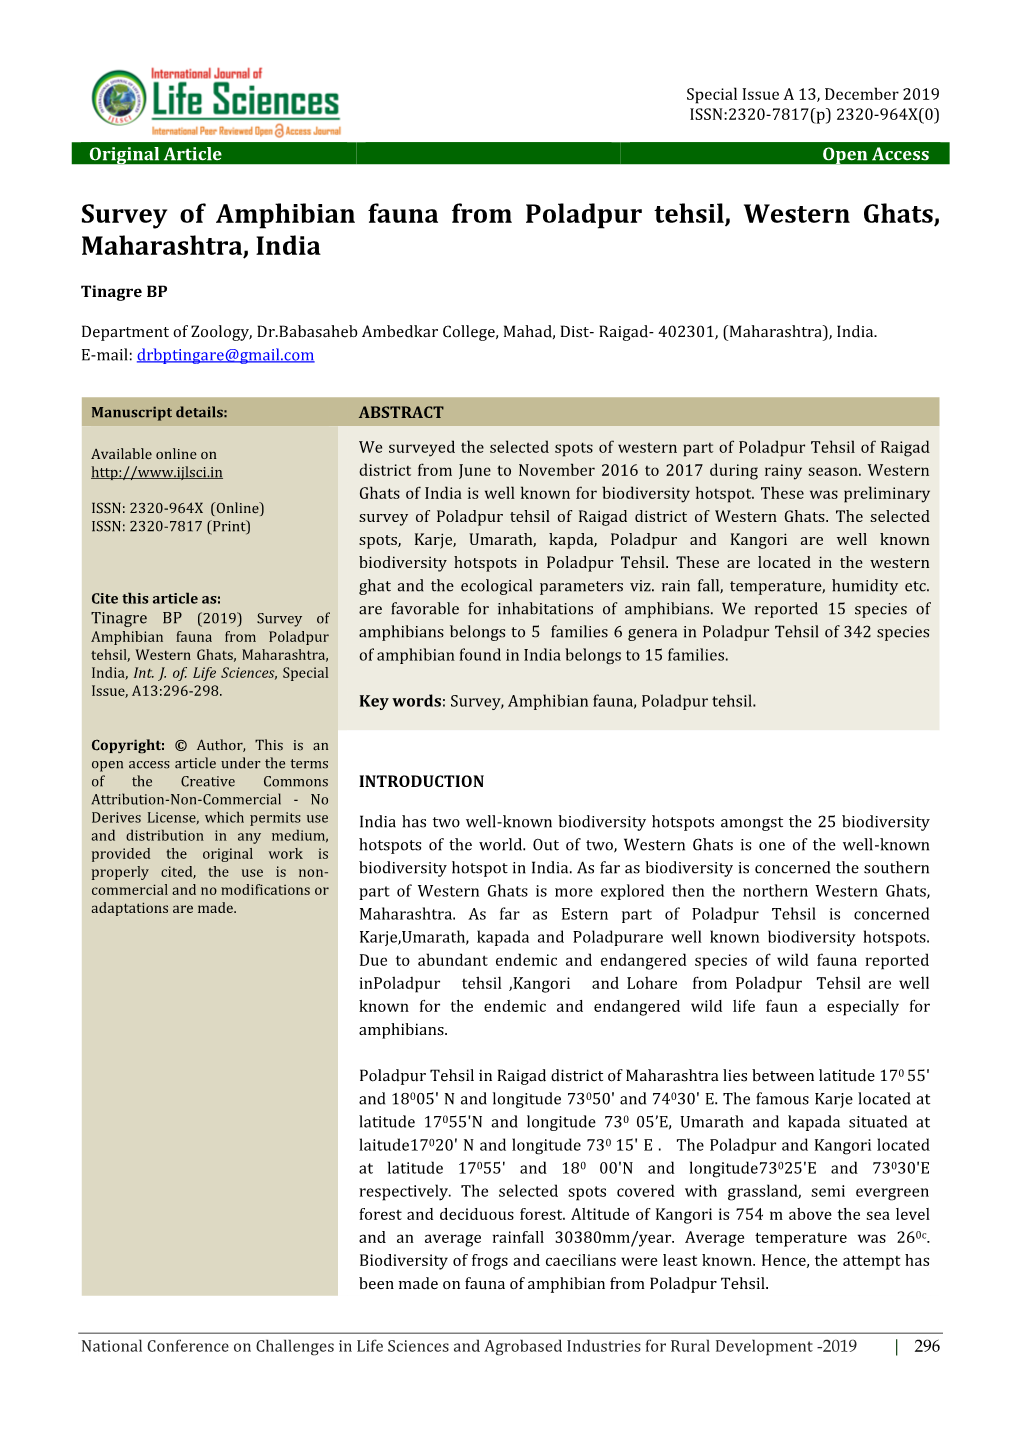 Survey of Amphibian Fauna from Poladpur Tehsil, Western Ghats, Maharashtra, India